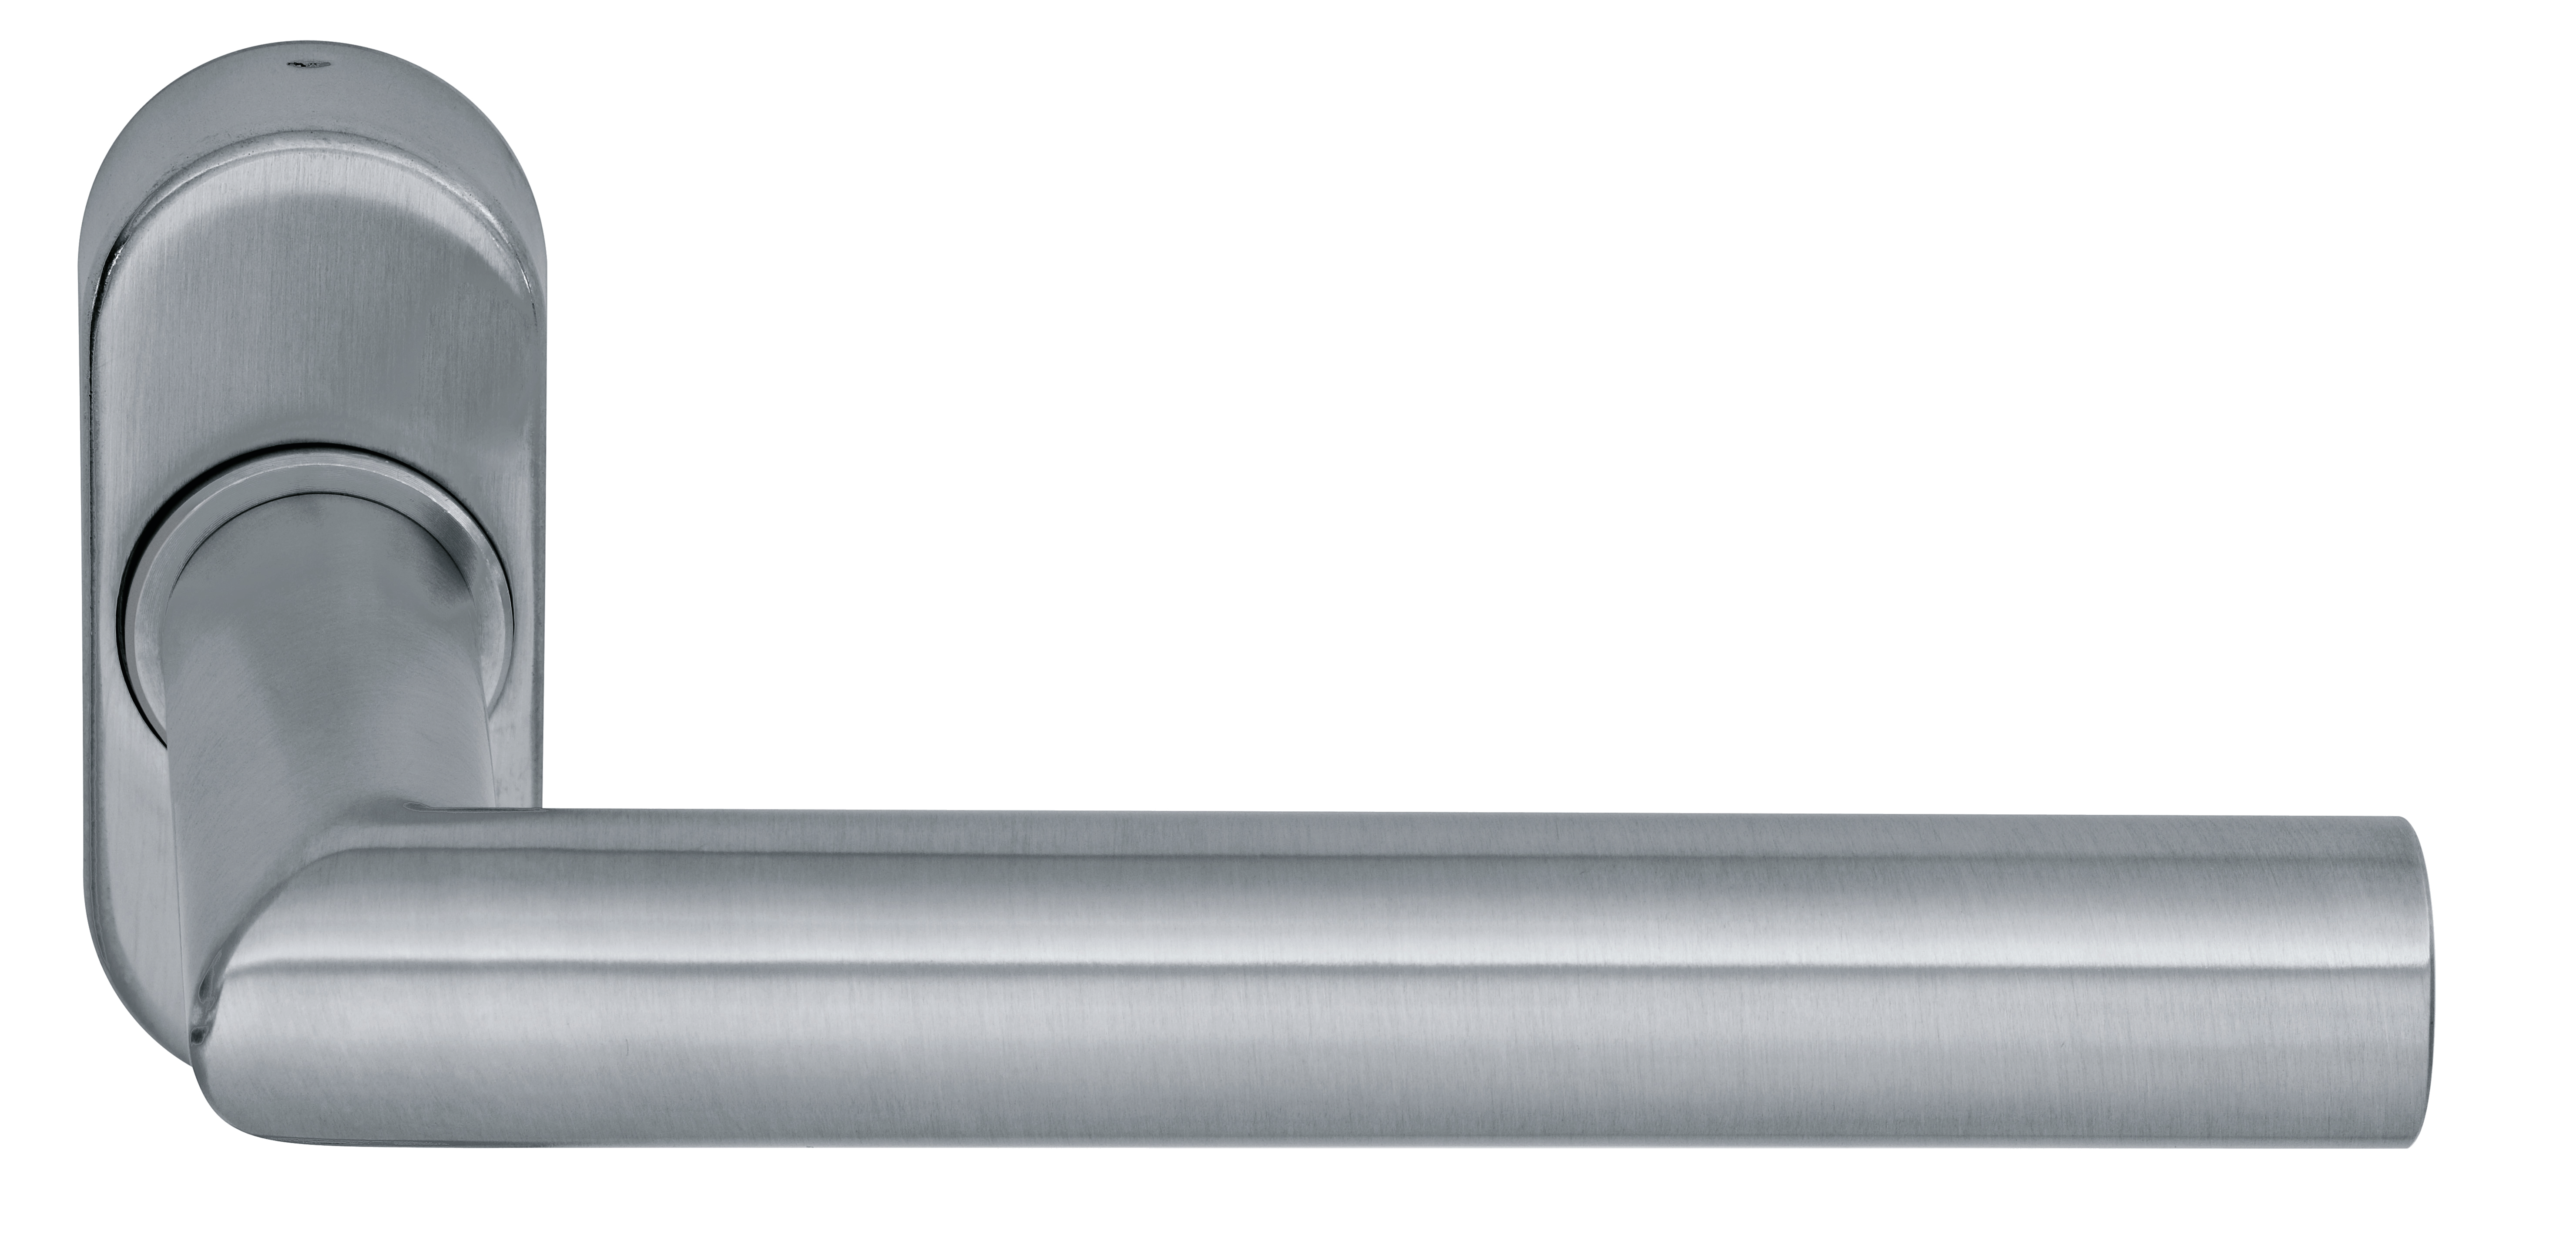 OGRO Core RR-Drückerlochteil 8 mm, 8906/6621